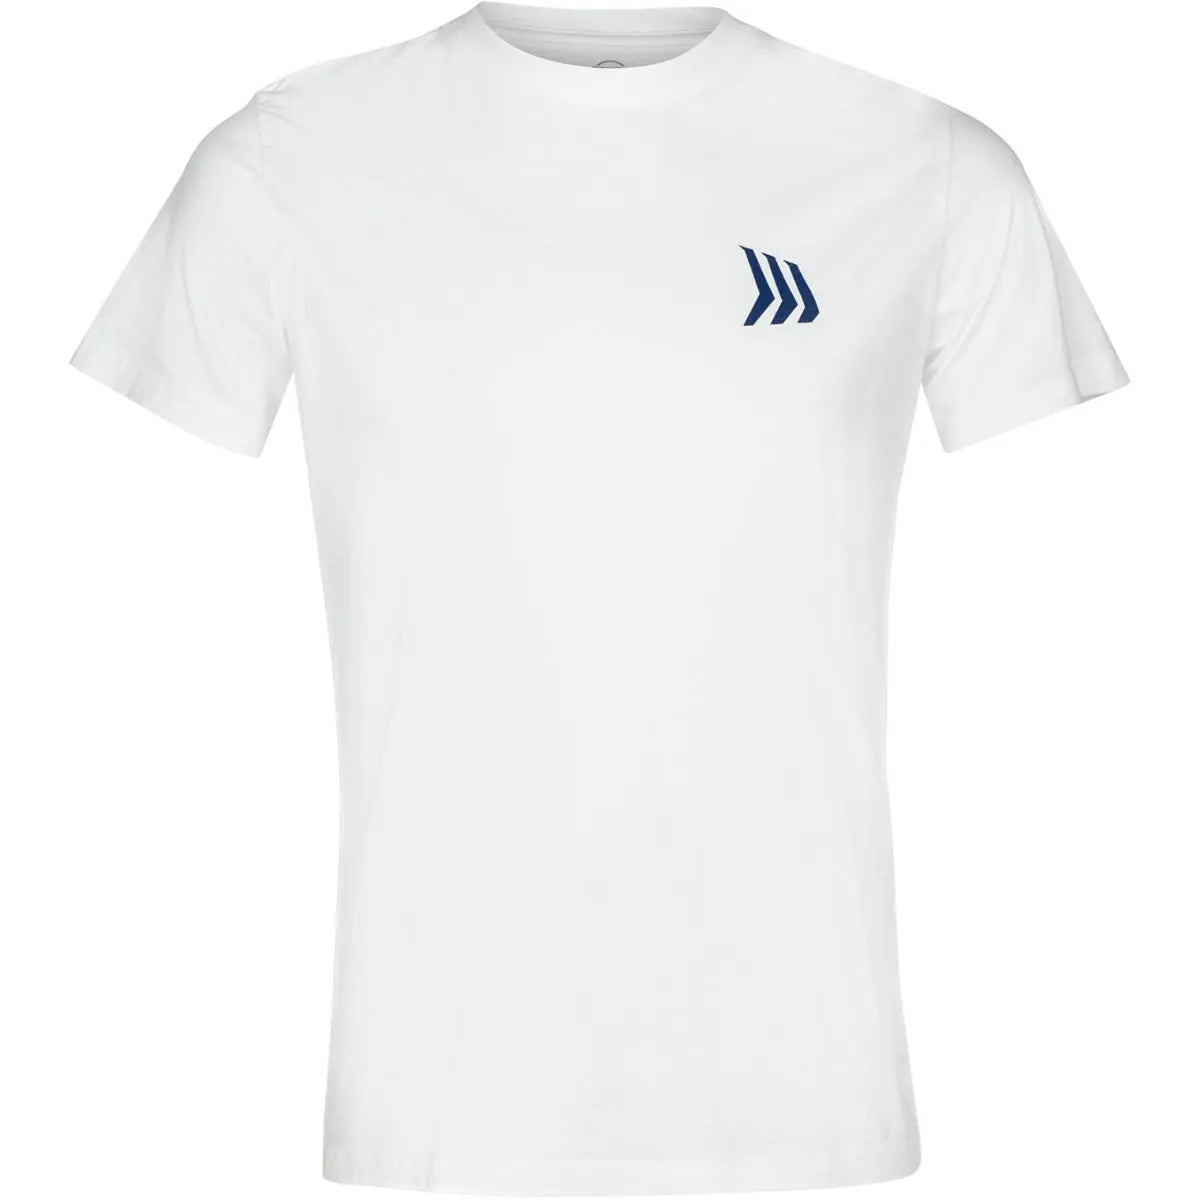 Gillz Contender Series 3 Gillz Flag T-Shirt - Brilliant White Gillz